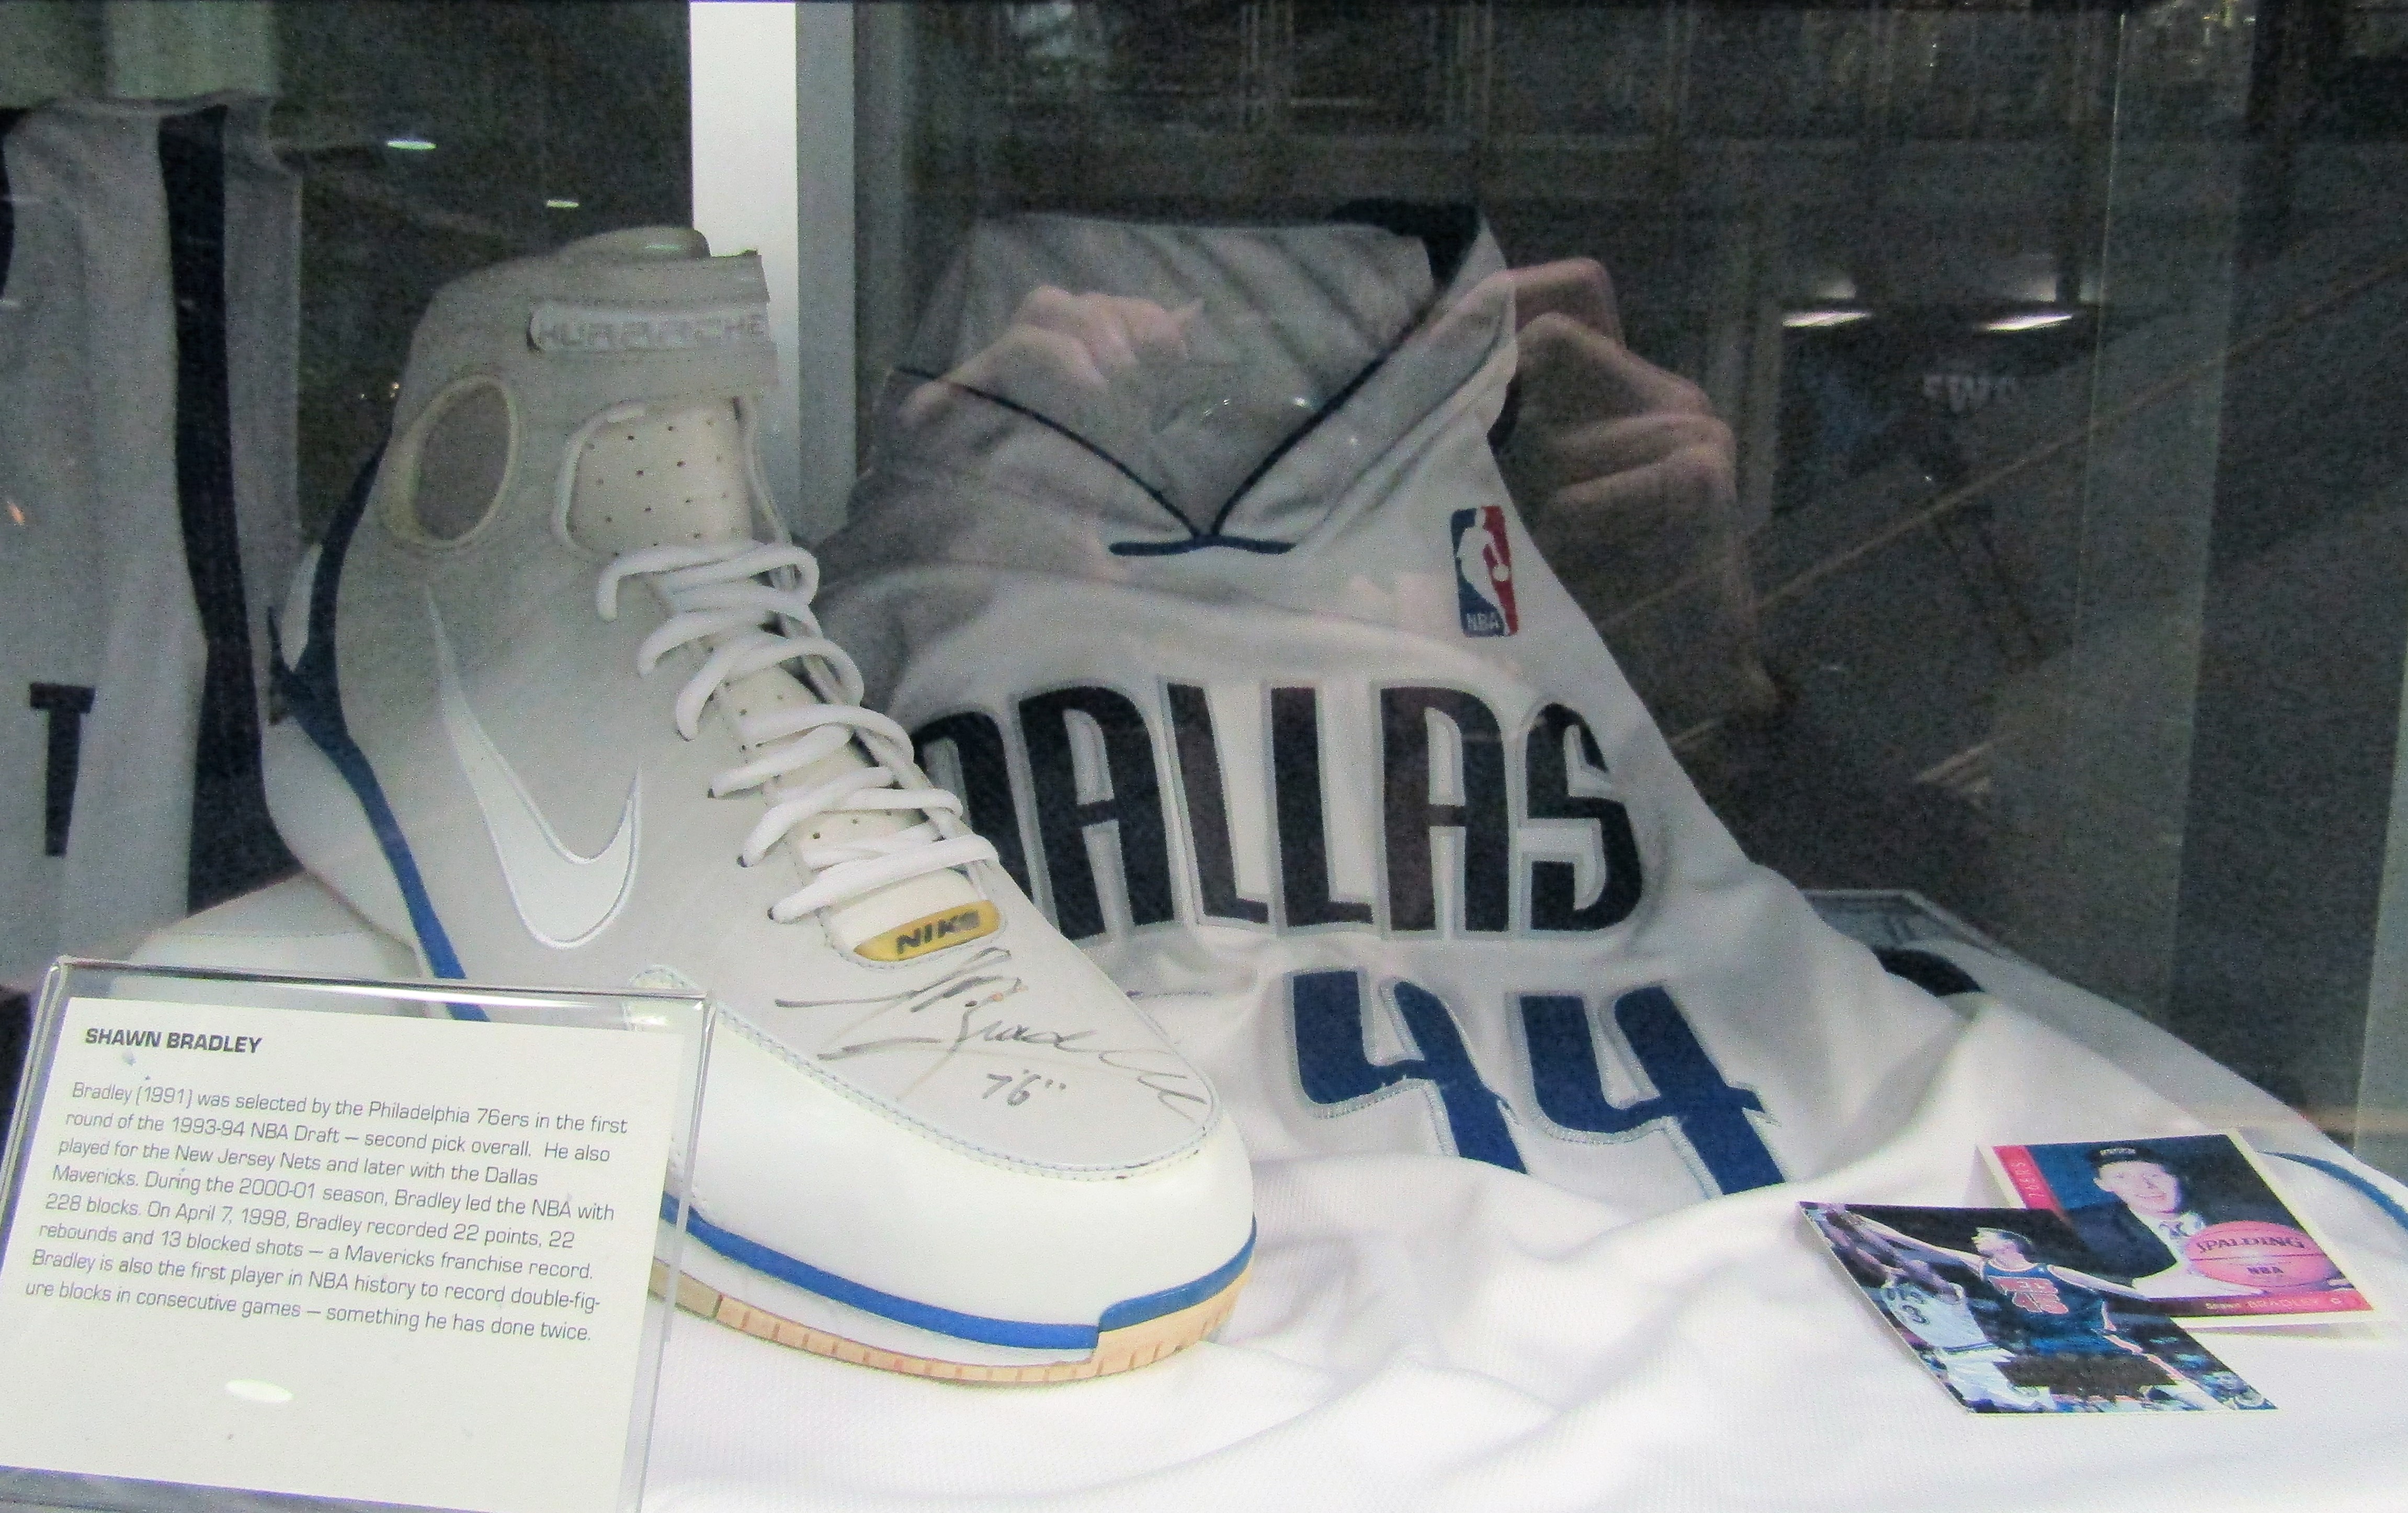 File:Shawn Bradley jersey and shoe (27727439538).jpg - Wikimedia Commons